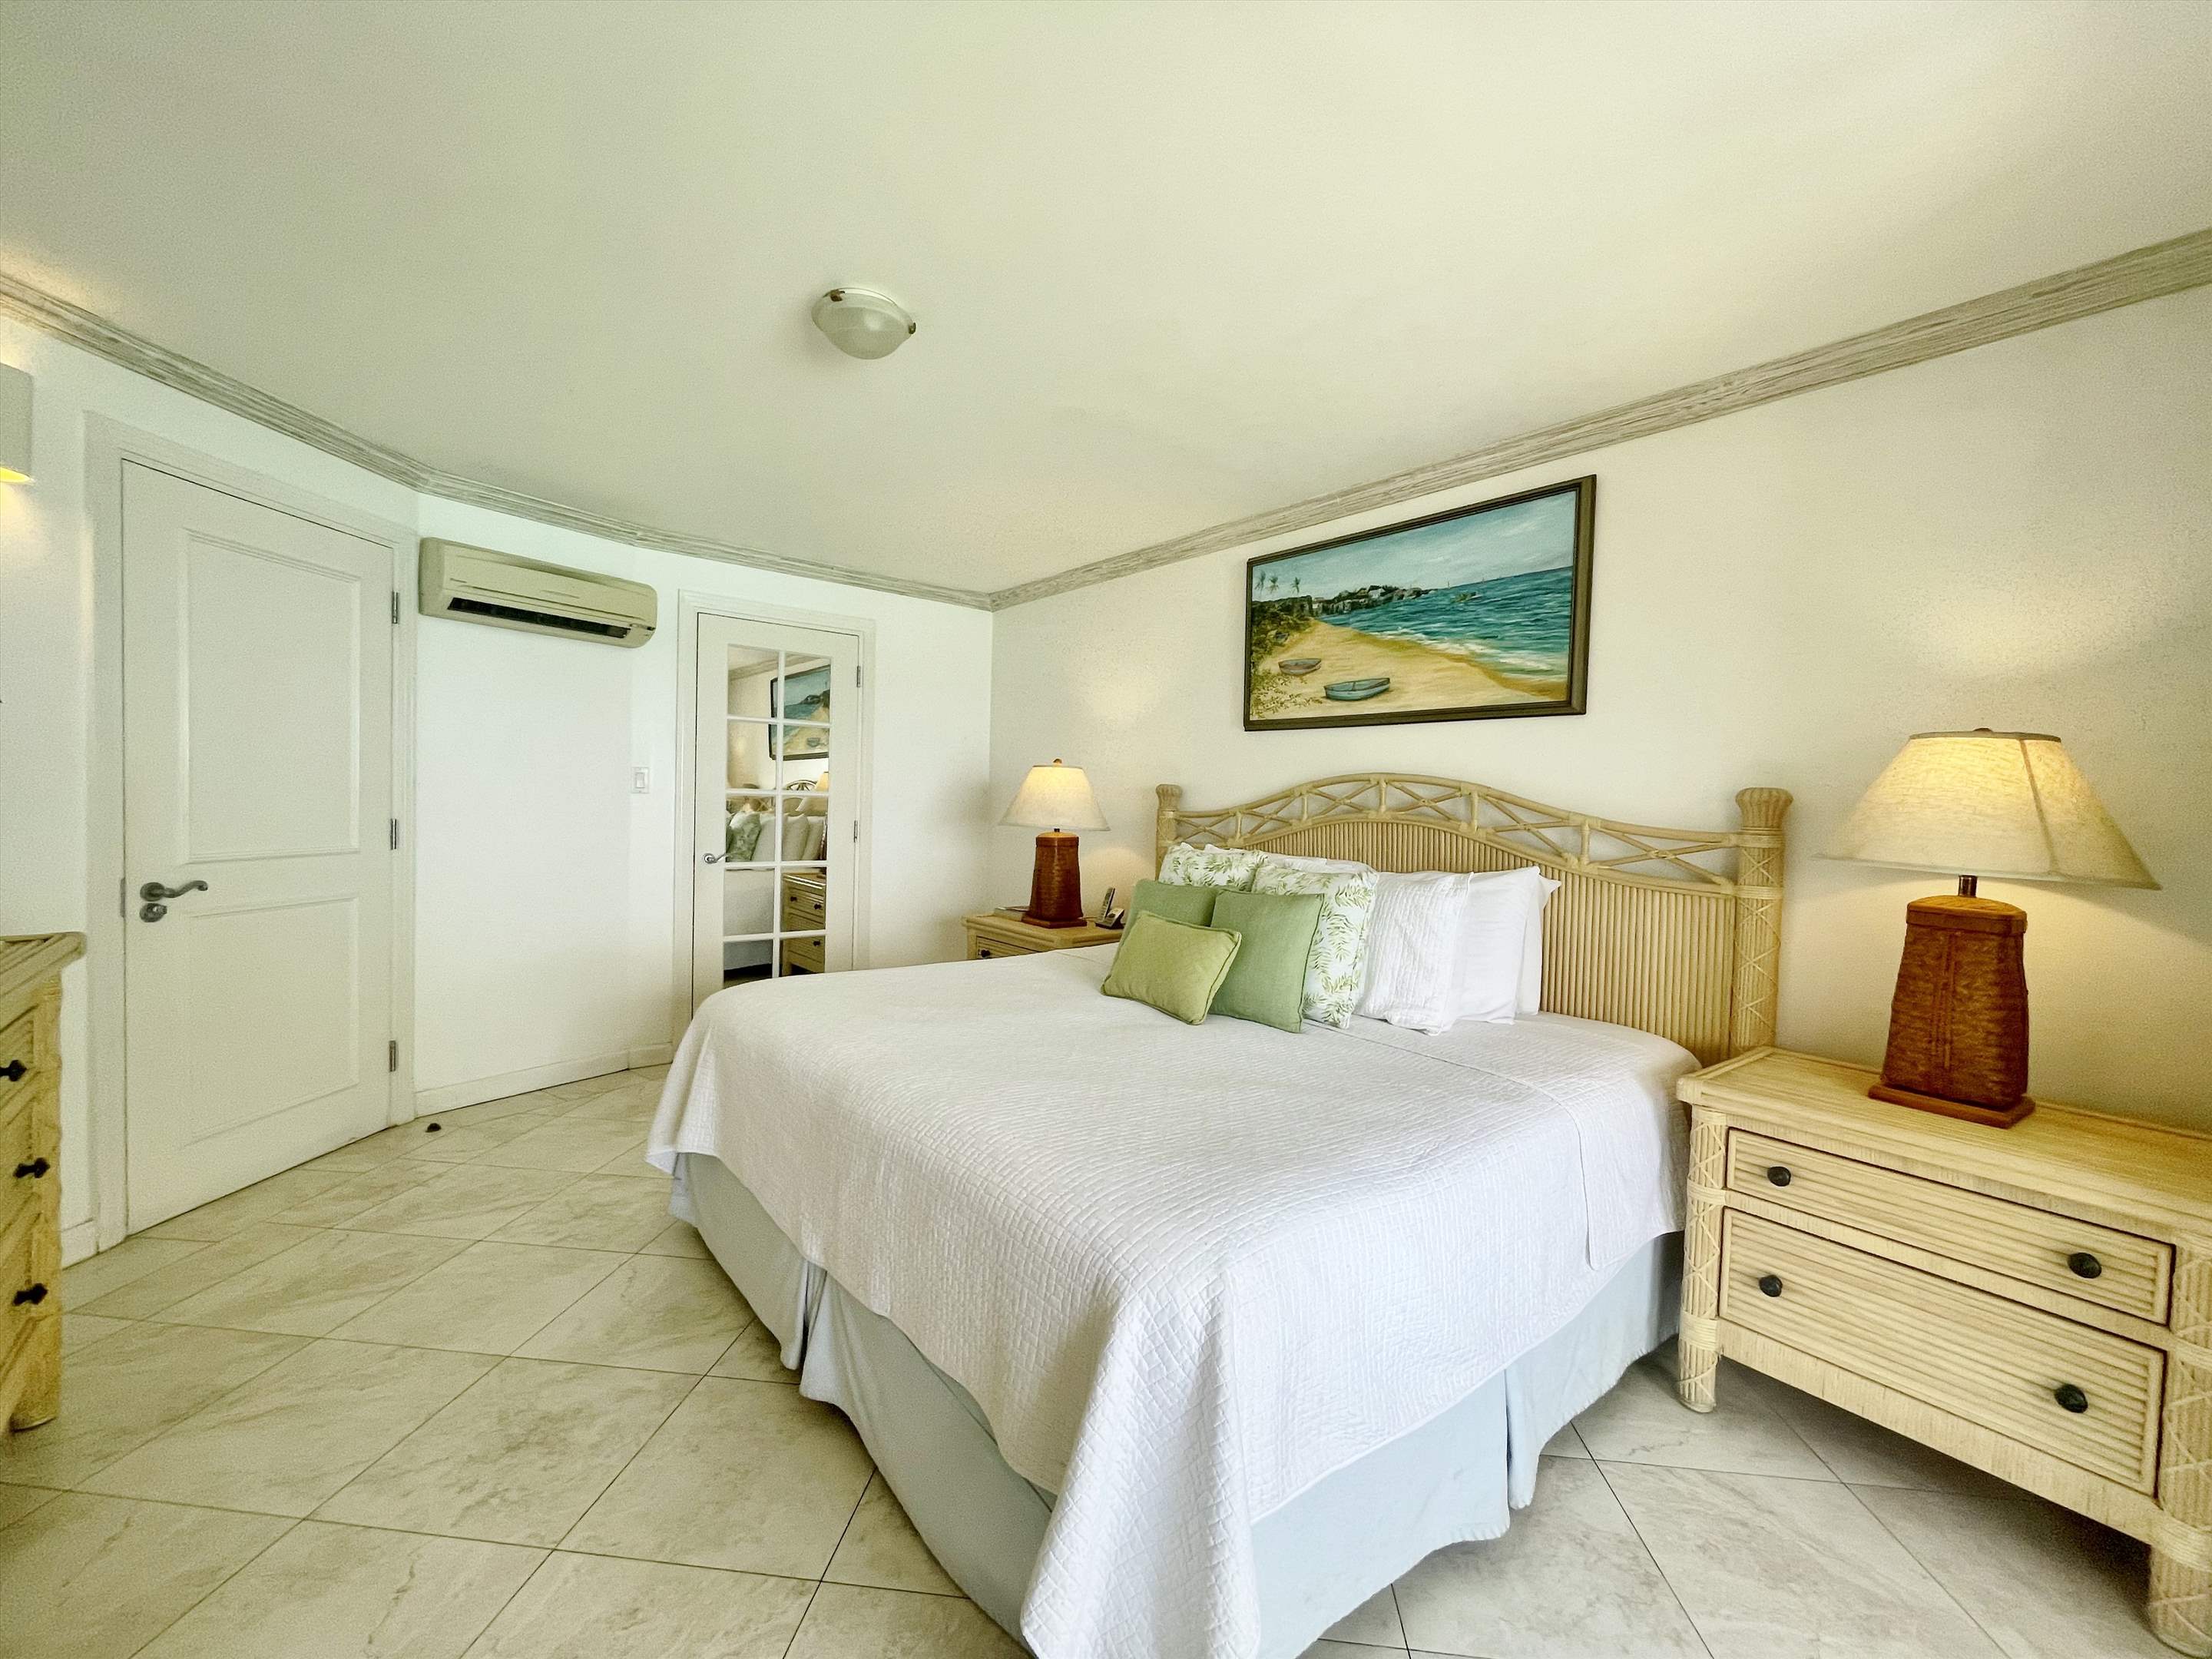 Villas on the Beach 303, 1 bedroom, 1 bedroom apartment in St. James & West Coast, Barbados Photo #10